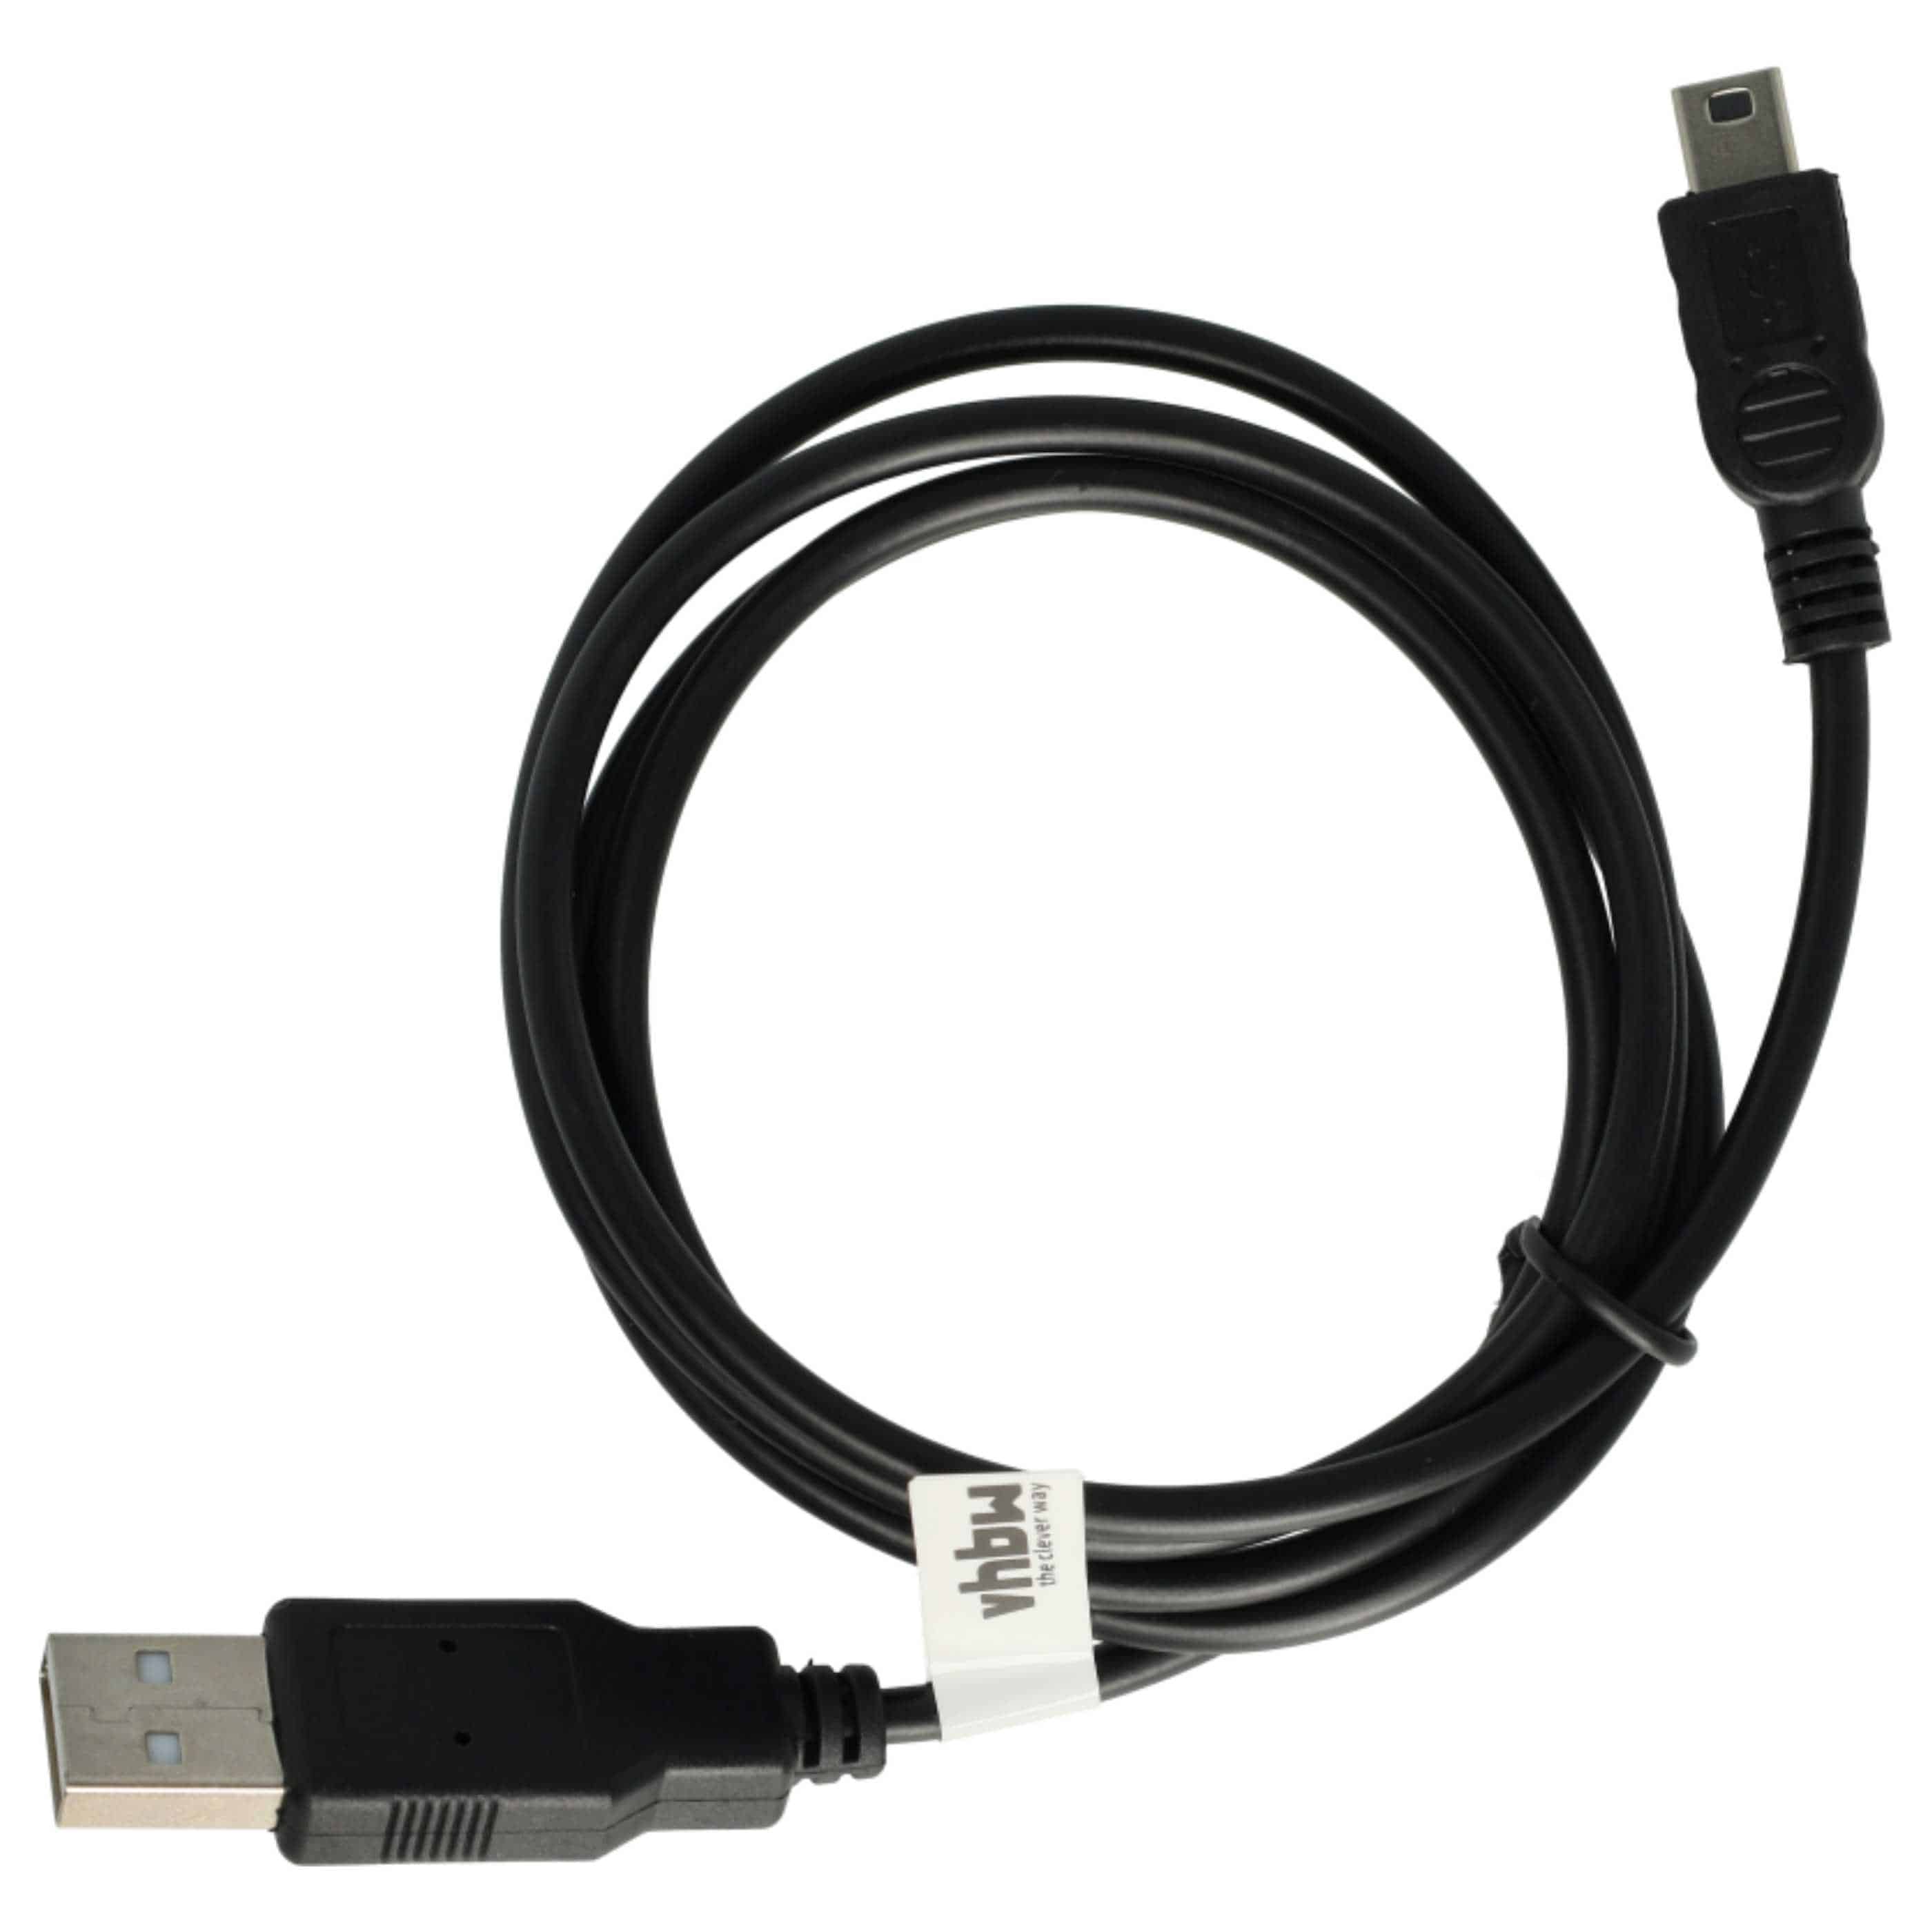 vhbw Cable USB consola - 2 en 1: cable de datos/cable de carga 1m100cm